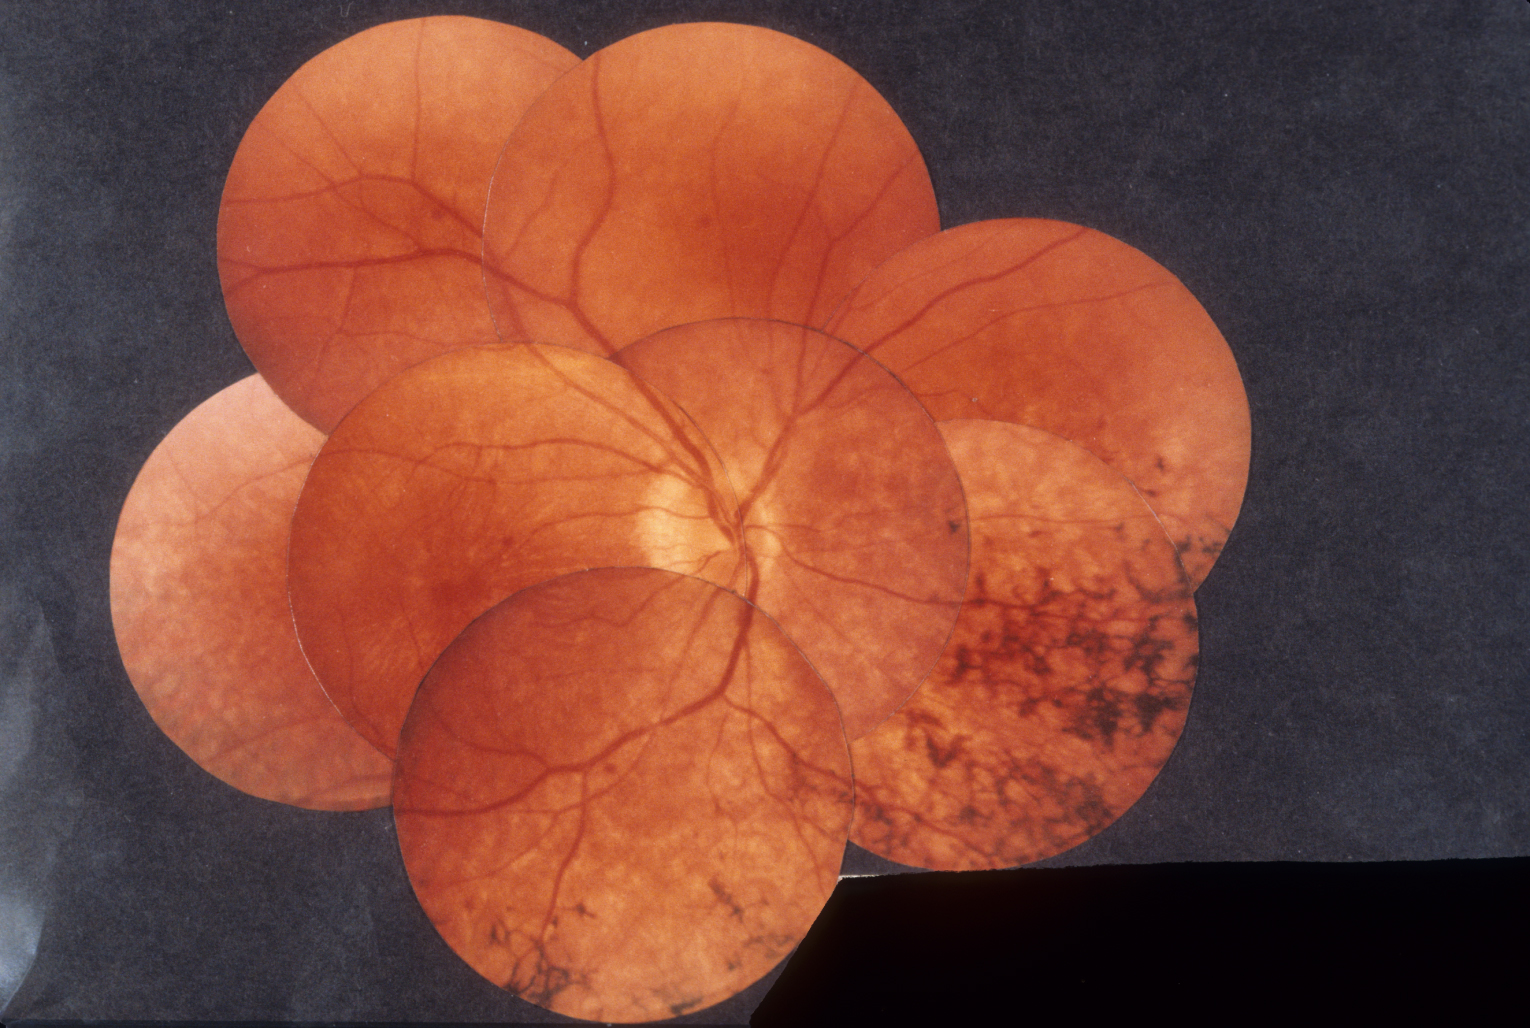 Fundus appearance of retinitis pigmentosa